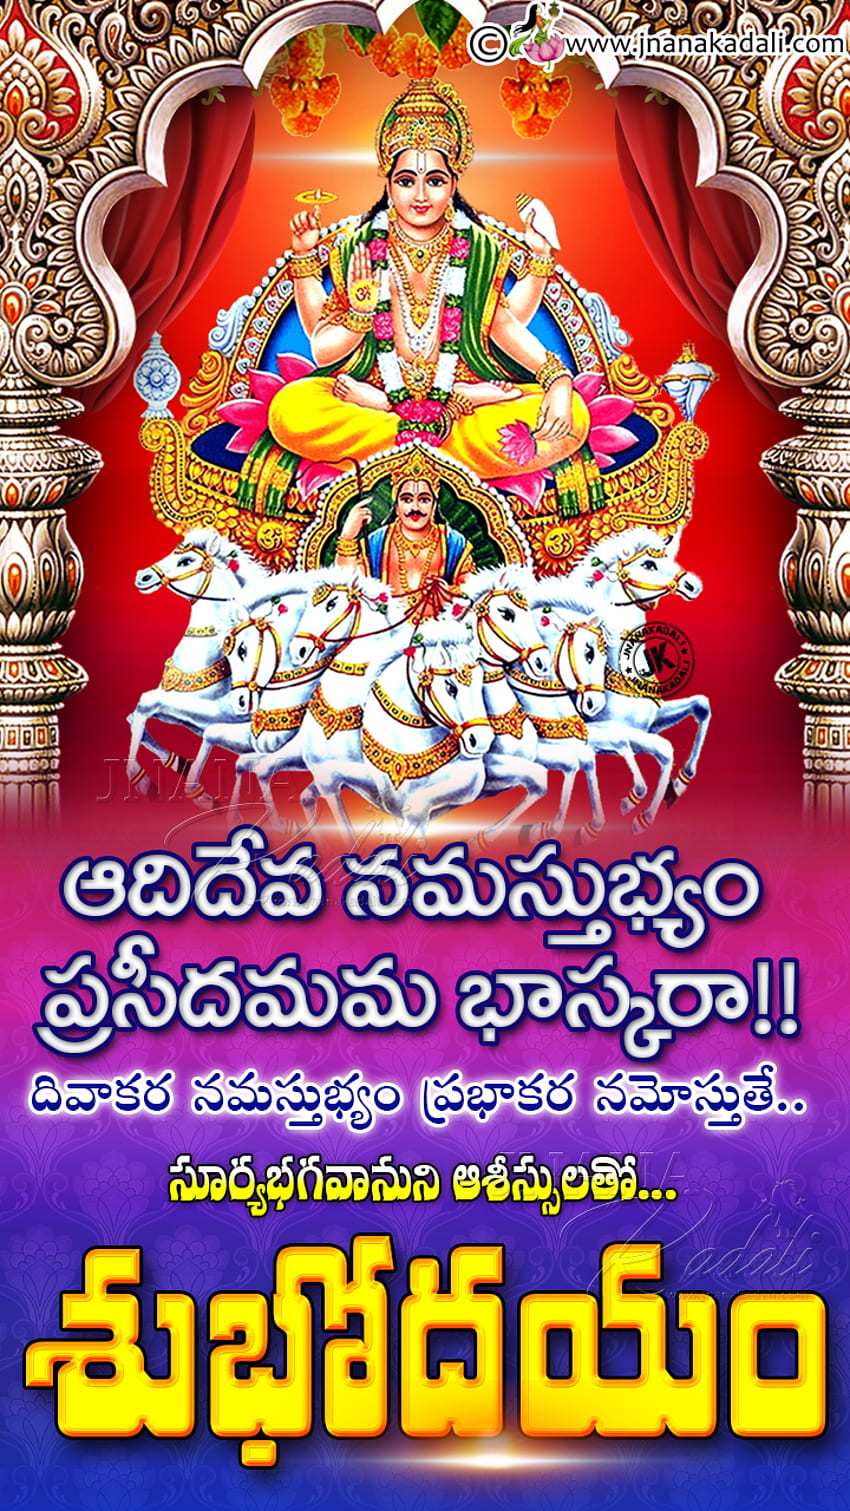 Surya Bhagavan With Good Morning Greetings In Telugu Subhodayam ...